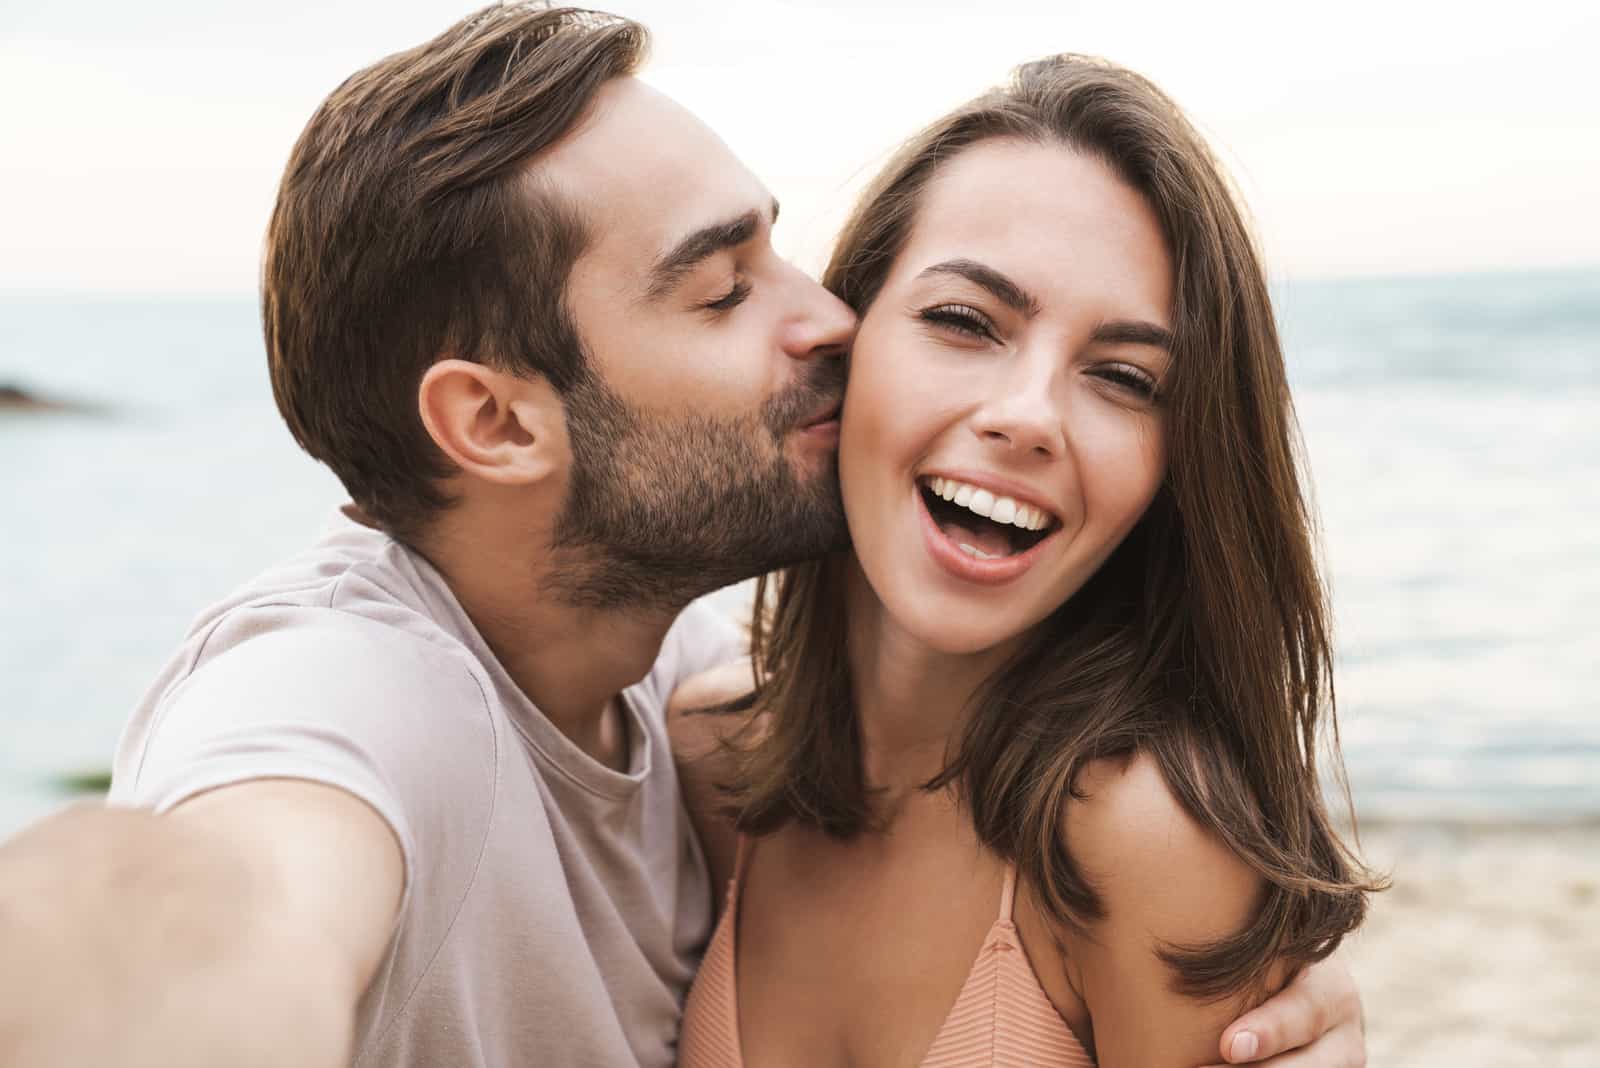 a man kisses a woman on the cheek